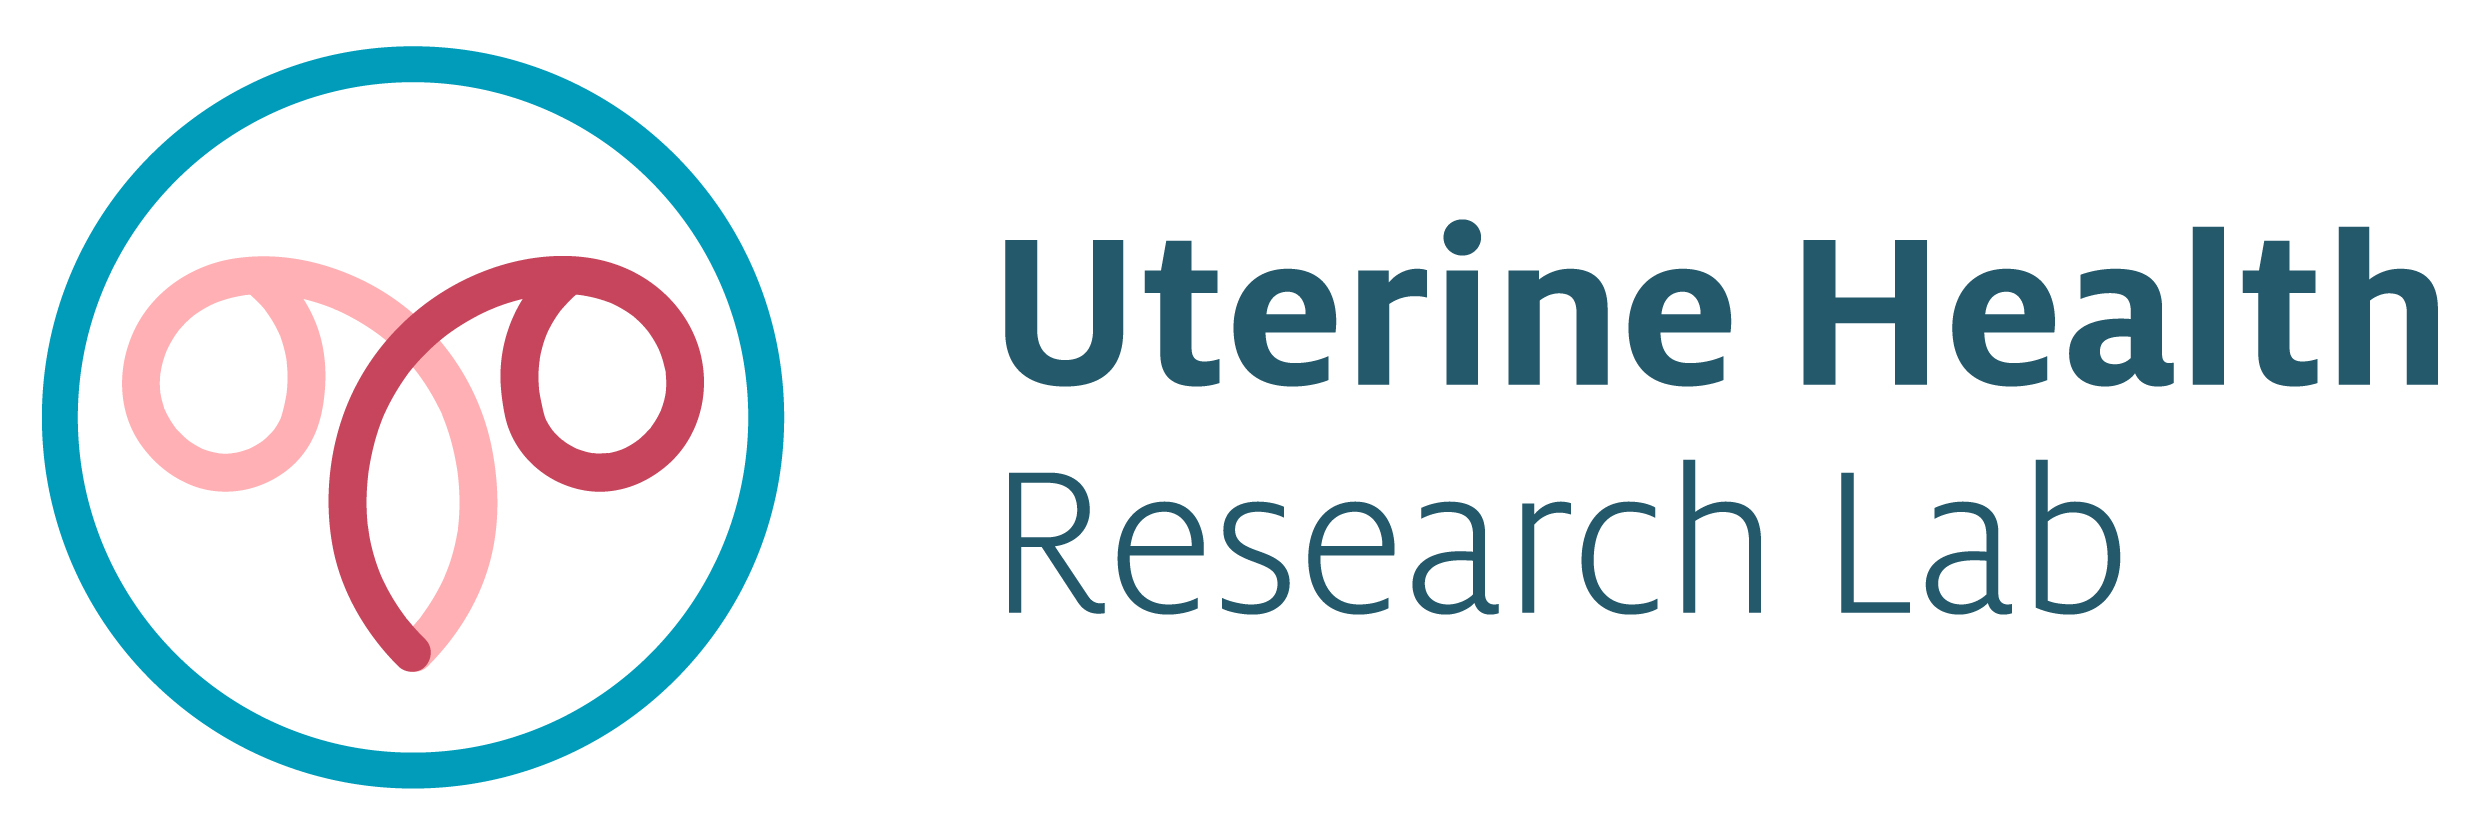 Uterine Health Research Lab